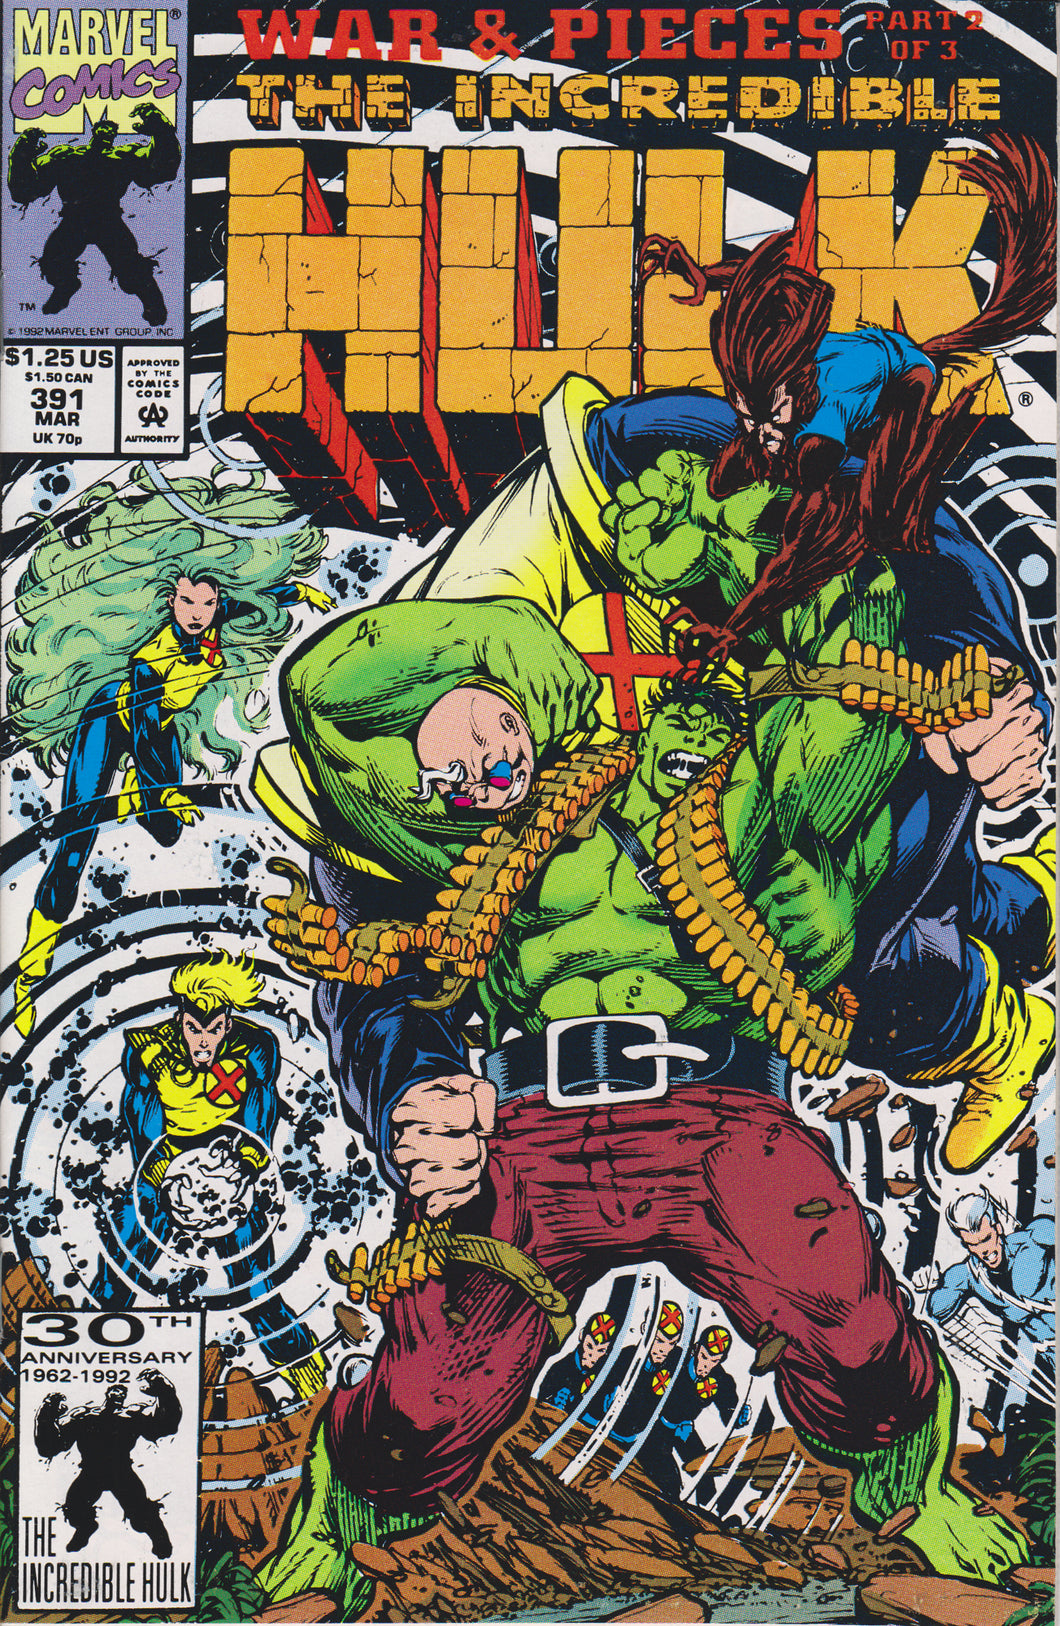 THE INCREDIBLE HULK #391 COMIC BOOK ~ Marvel Comics